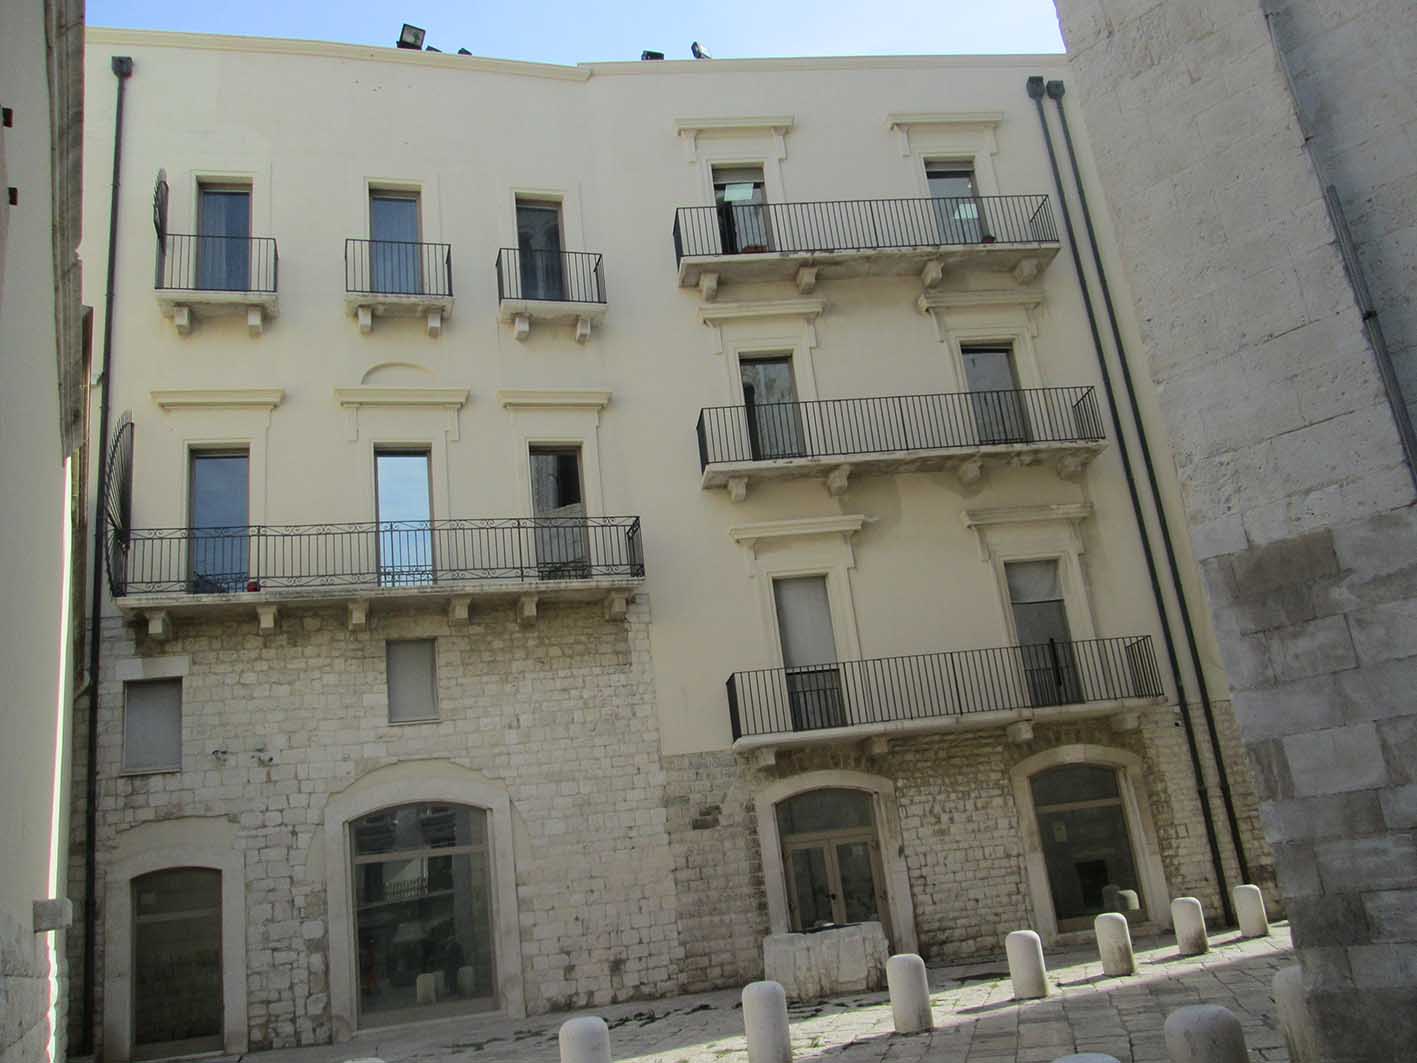 Palazzo Costantino (palazzo, residenziale) - Bari (BA) 